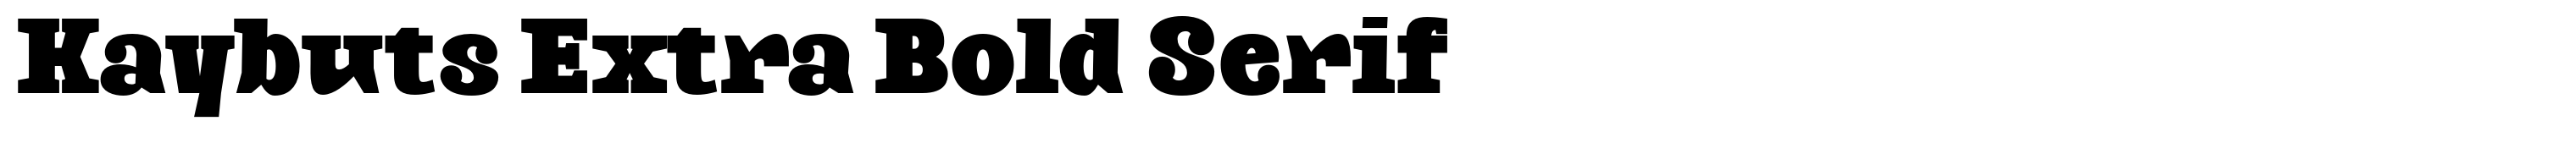 Kaybuts Extra Bold Serif